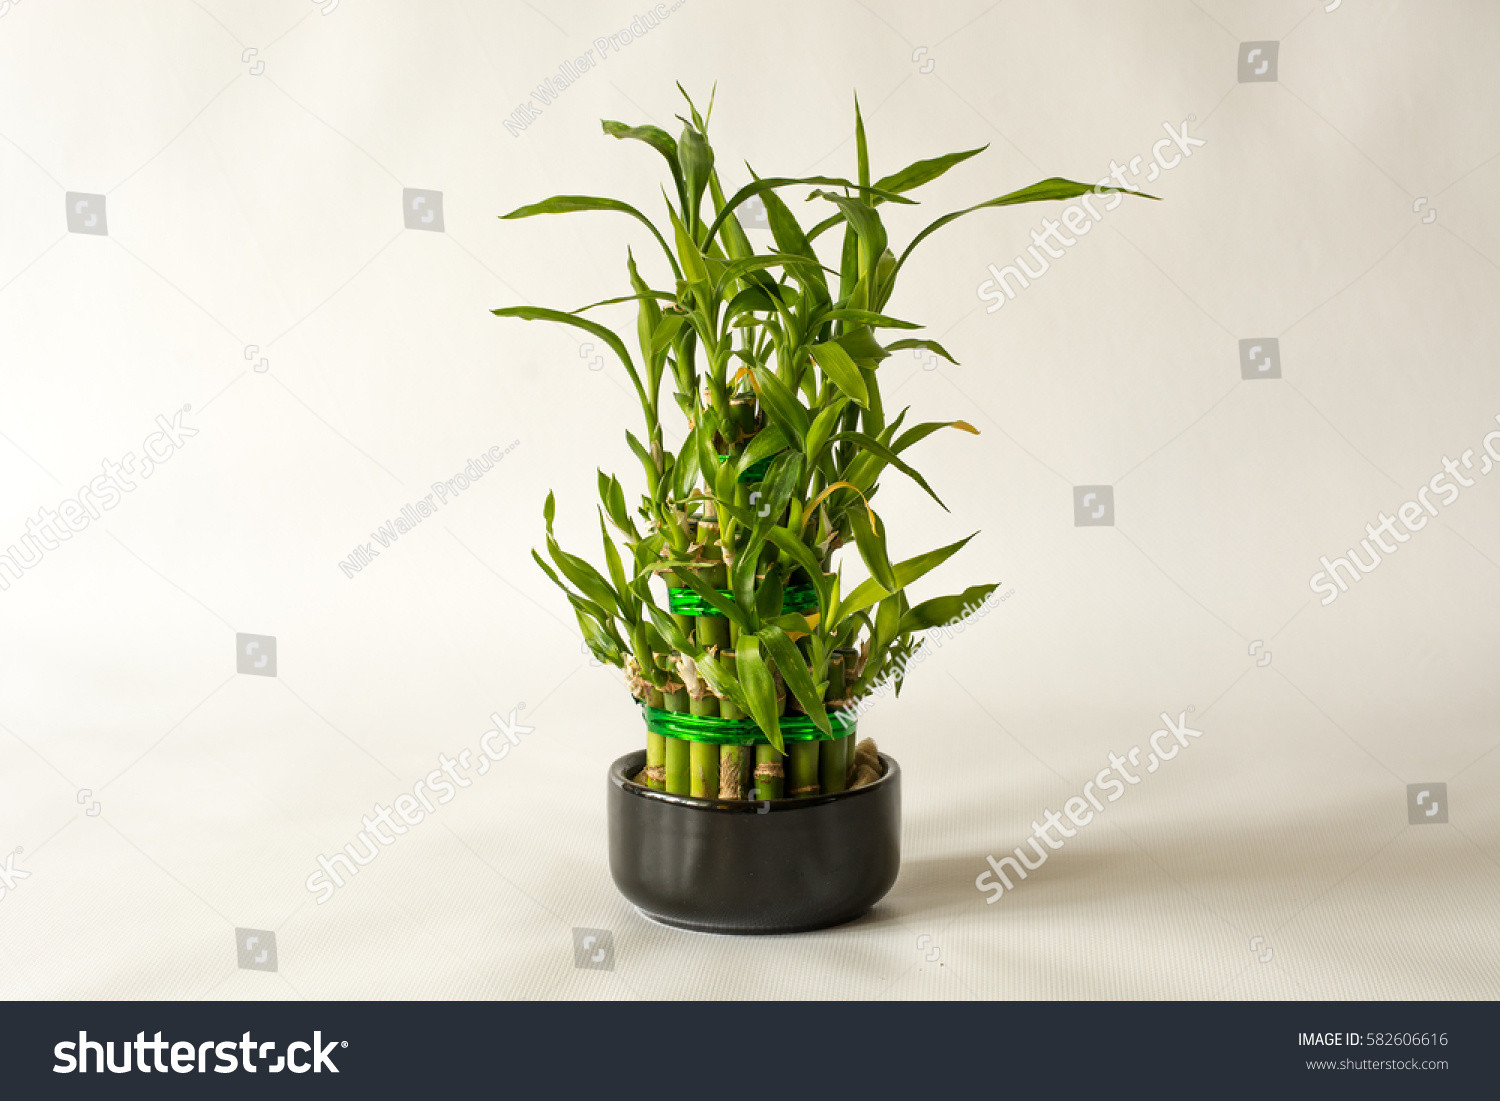 3,119 Mini Bamboo Images, Stock Photos & Vectors | Shutterstock